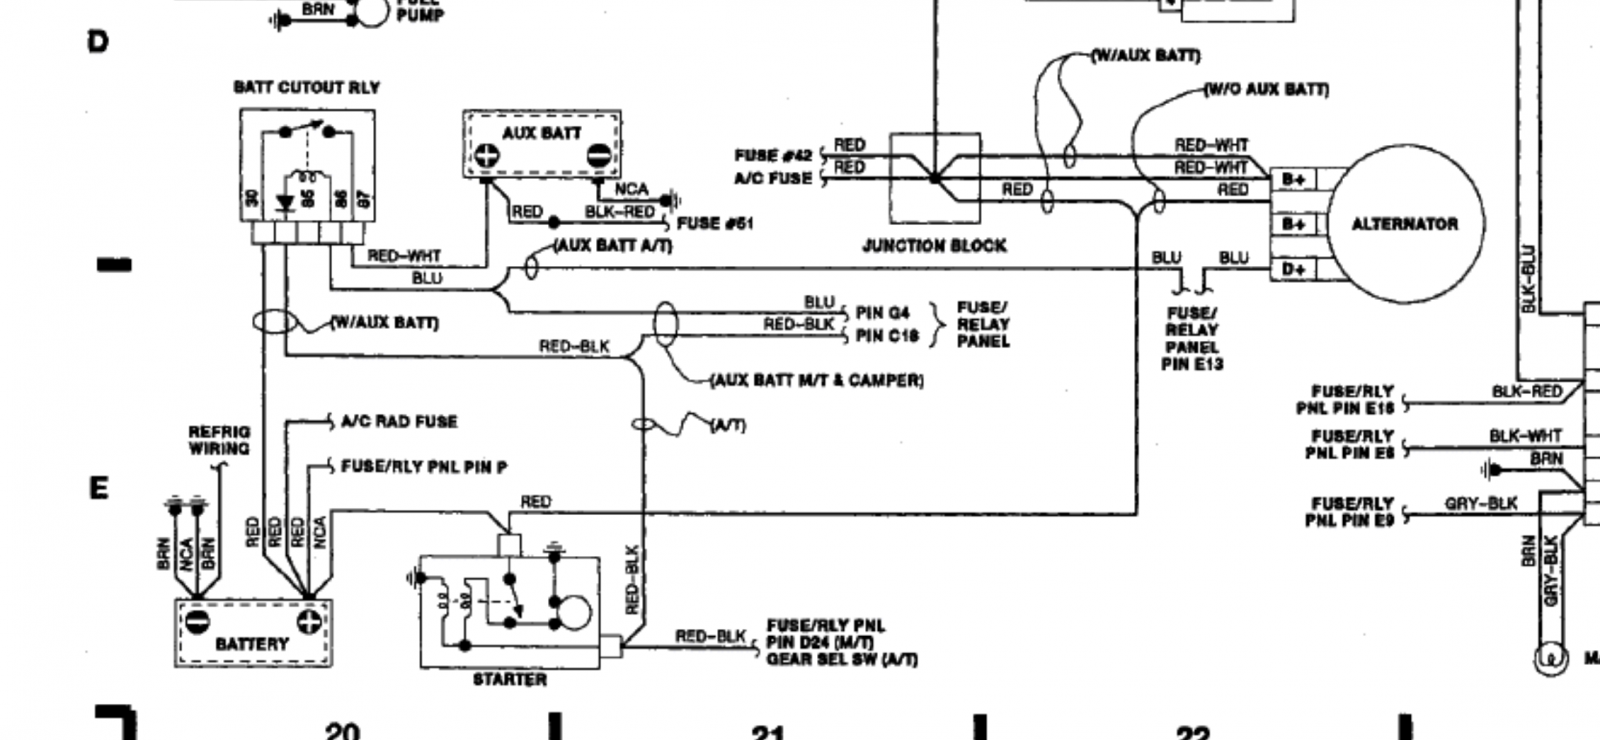 TheSamba.com :: Gallery - 1987 Vanagon w/ aux battery wiring diagram ...